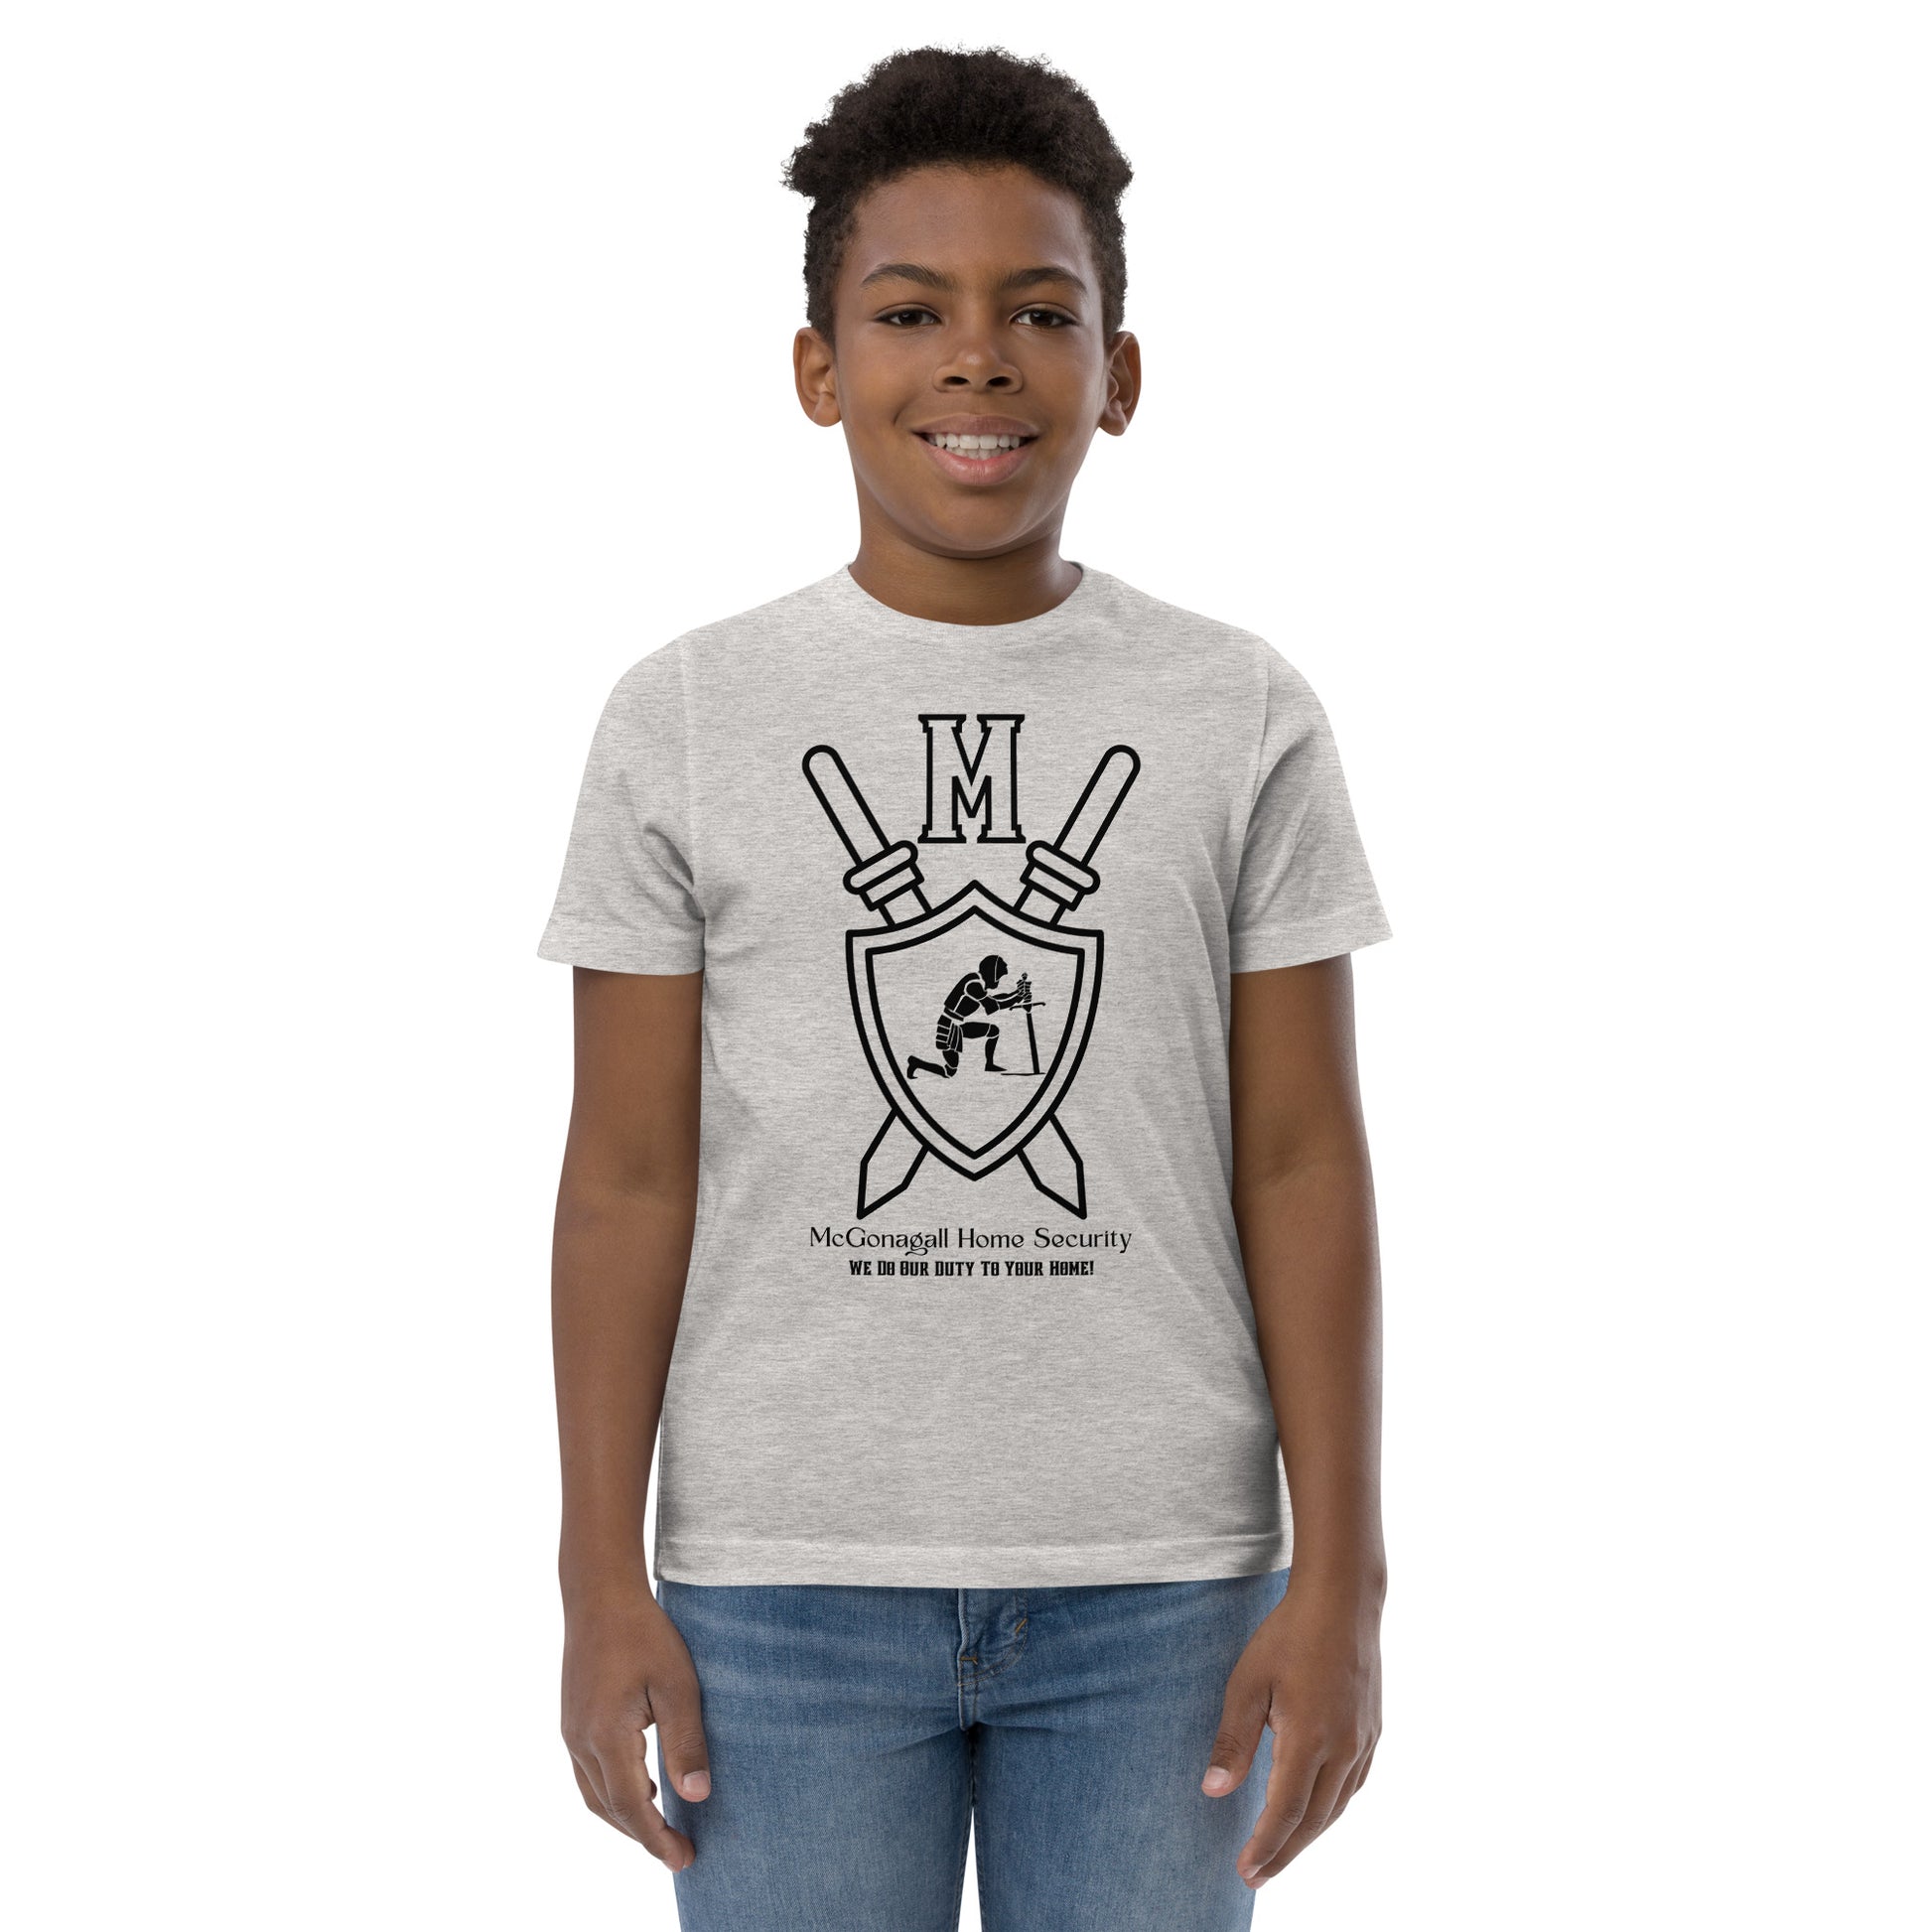 McGonagall Home Security Youth jersey t-shirt - A. Mandaline Art